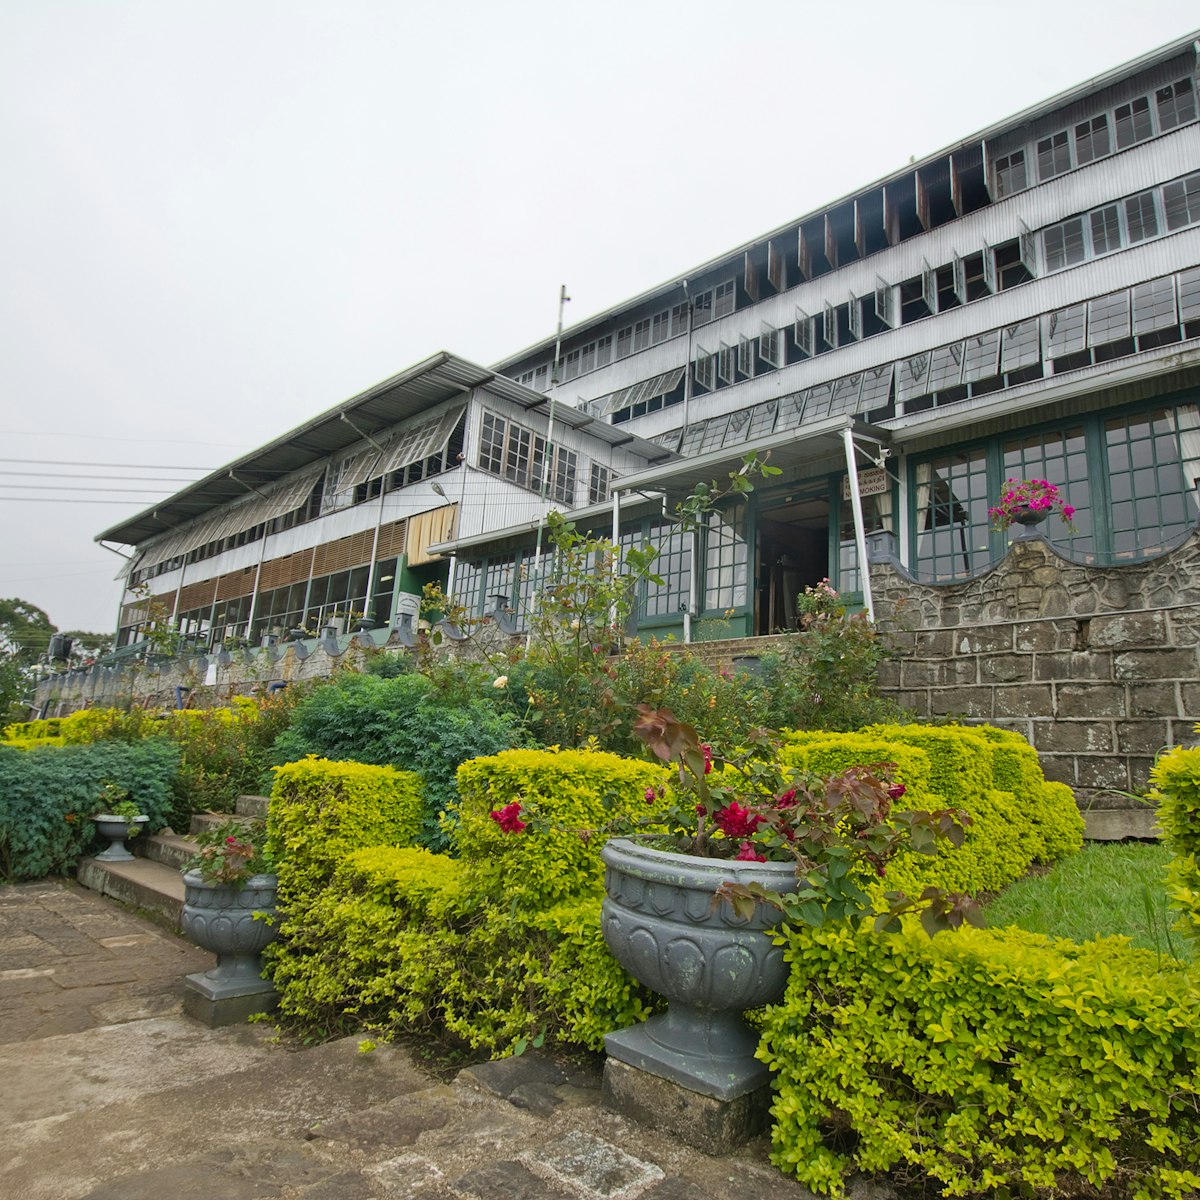 Dambatenne tea factory that was built in 1890 by Sir Thomas Lipton, in Haputale, Sri Lanka.